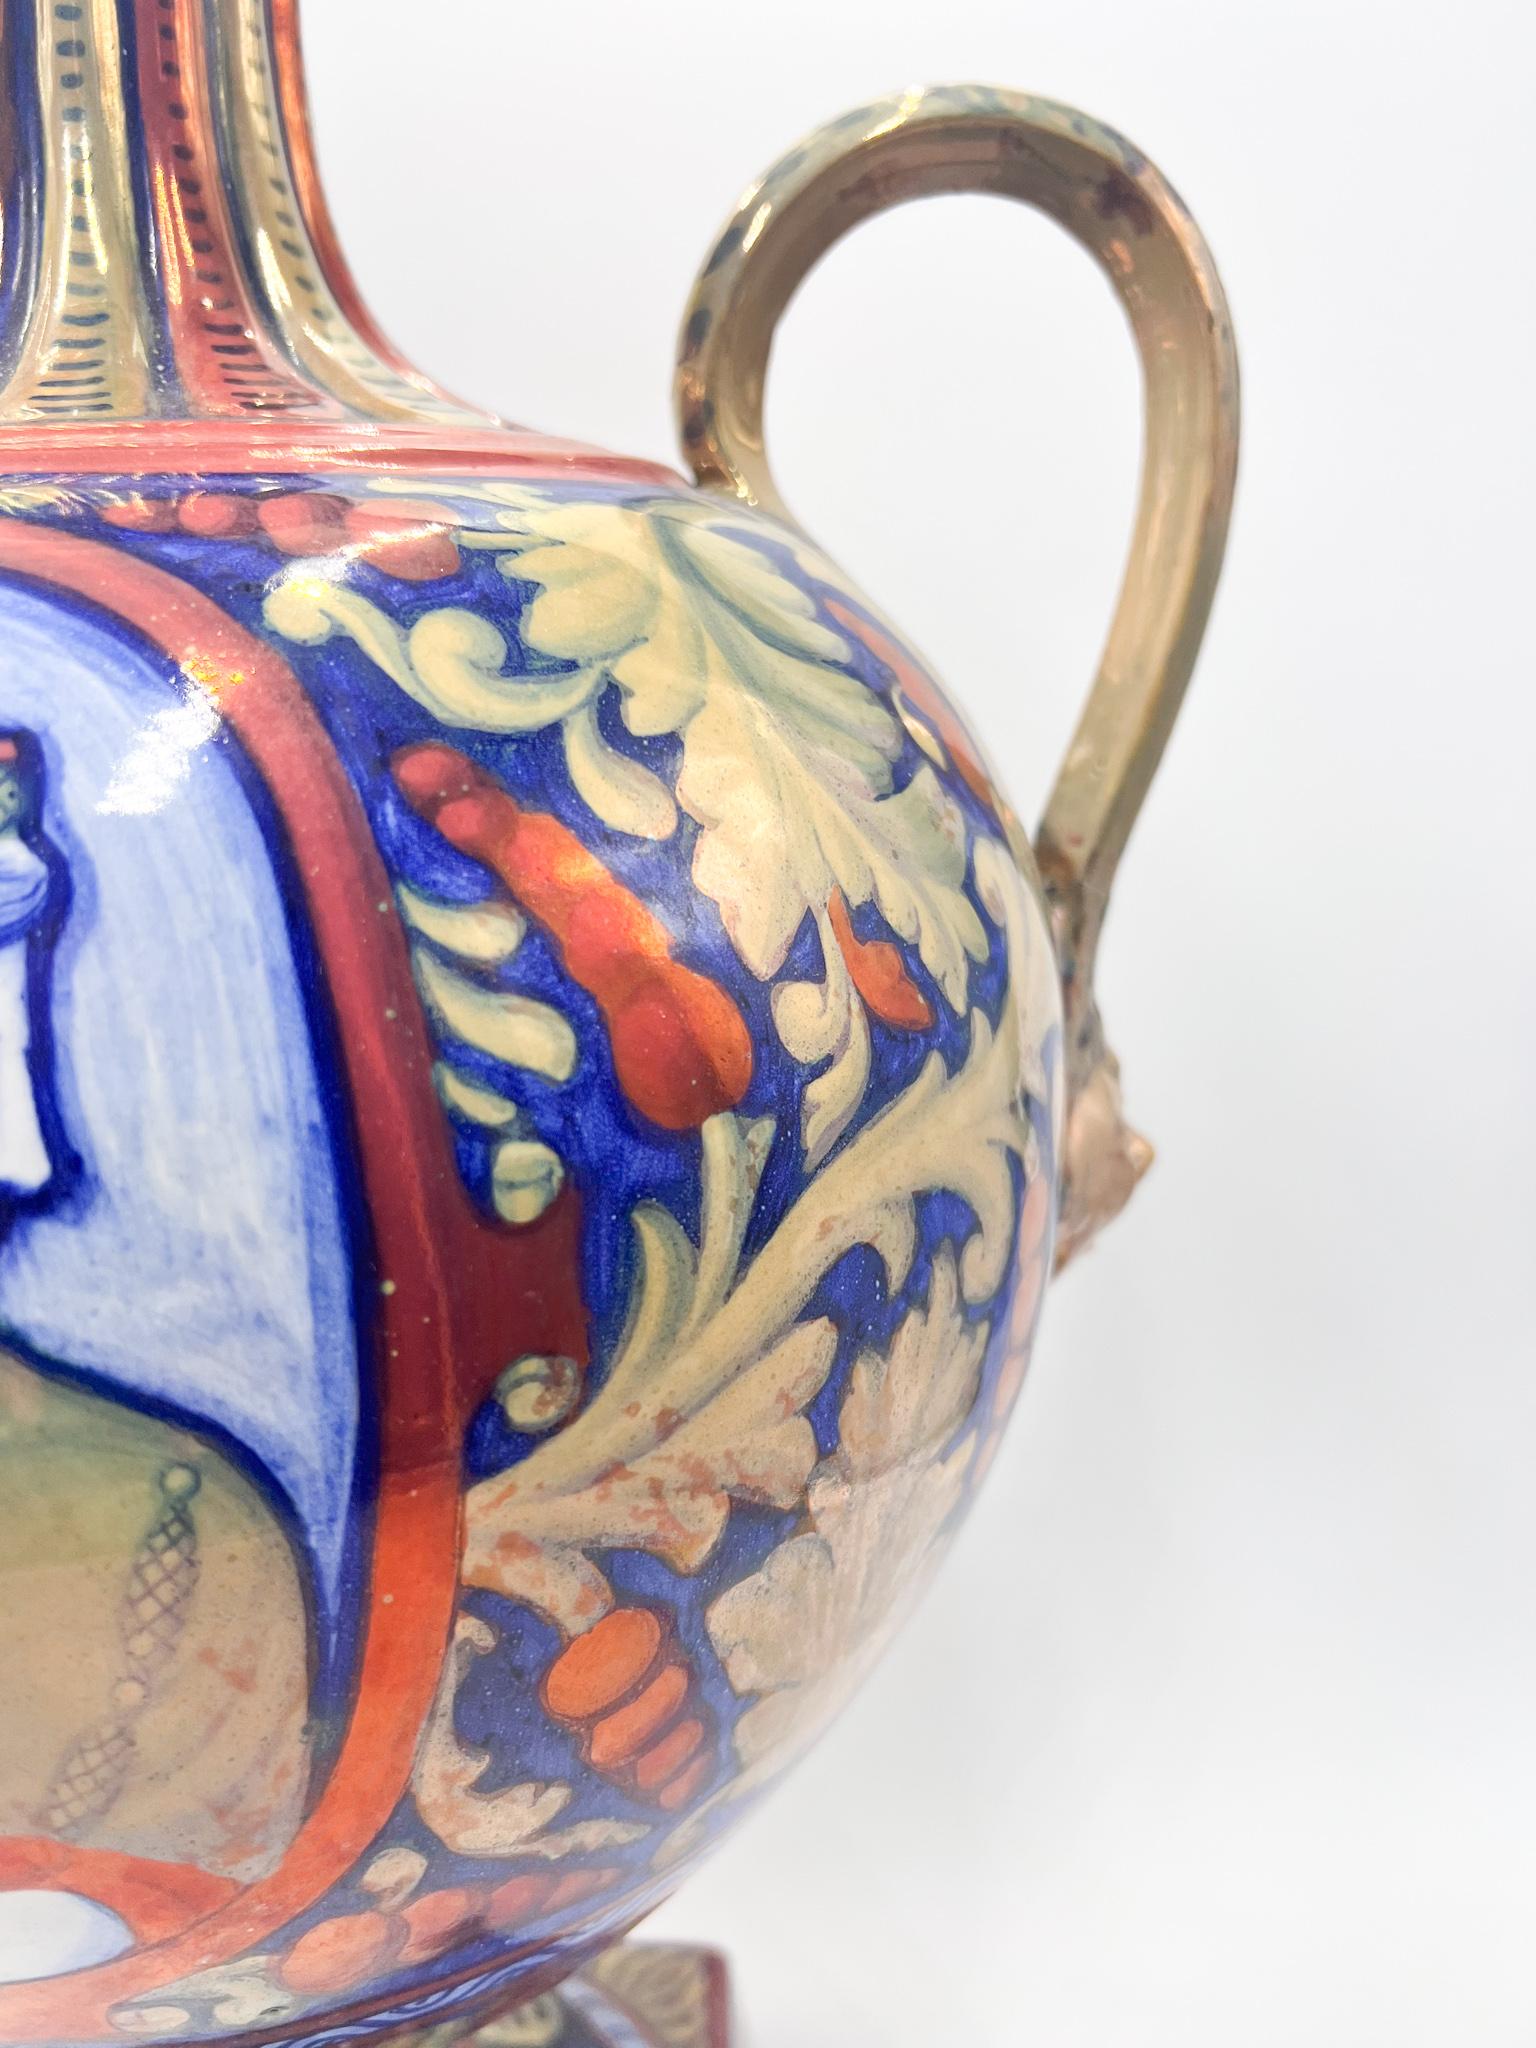 Early 20th Century Ceramic Vase by Gualdo Tadino For Sale 1